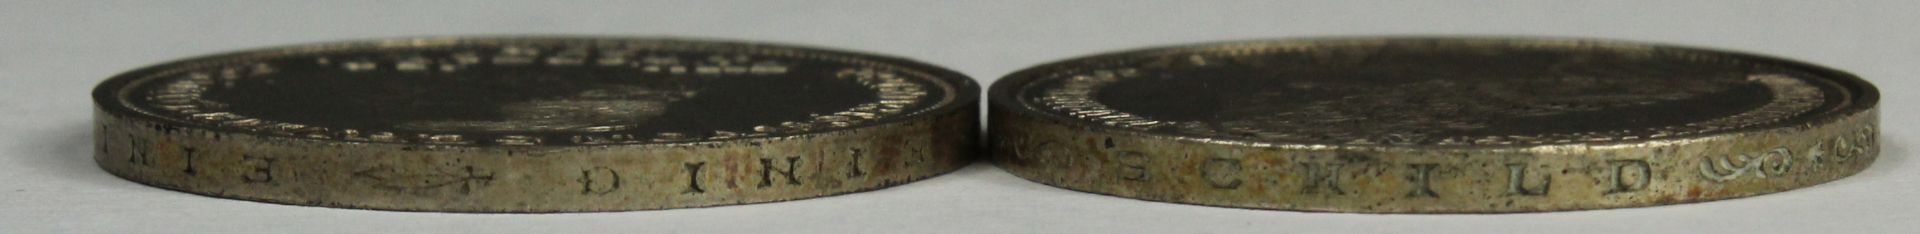 2 Silbermünzen. - Image 6 of 8